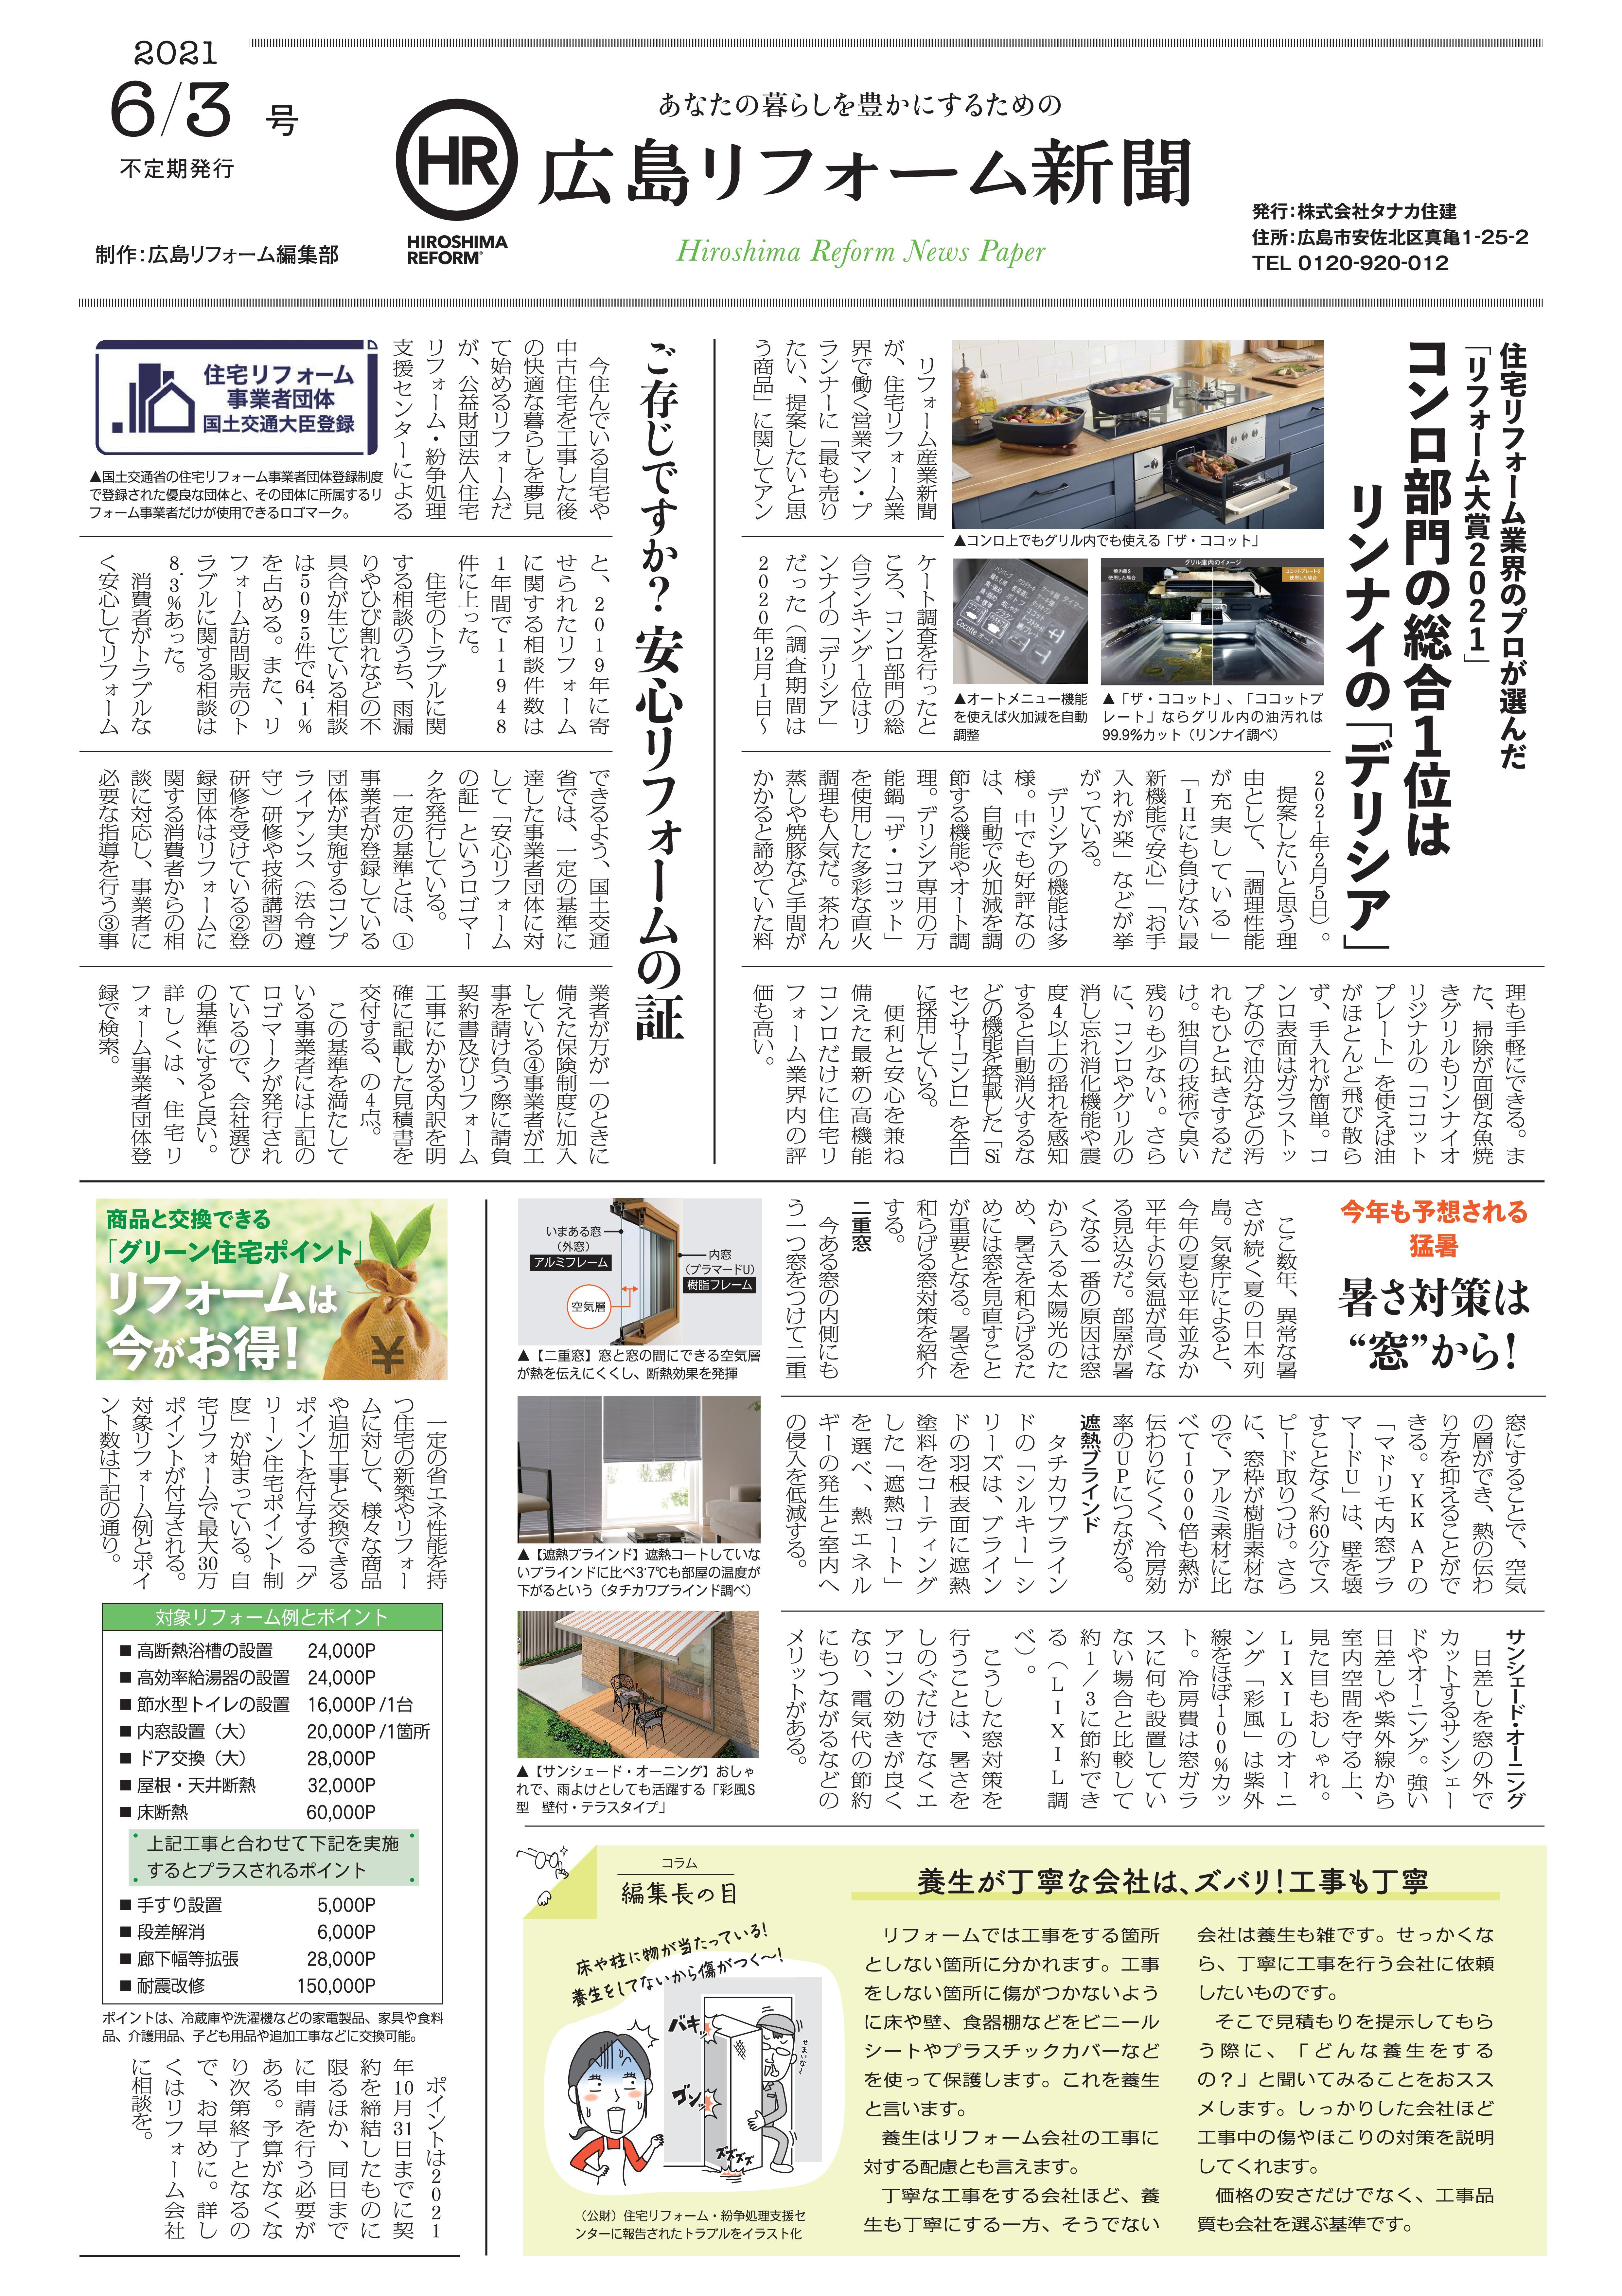 http://www.tanakajuken.com/blog/images/hiroshima%20reform%20news%20paper%20%281%29.jpg